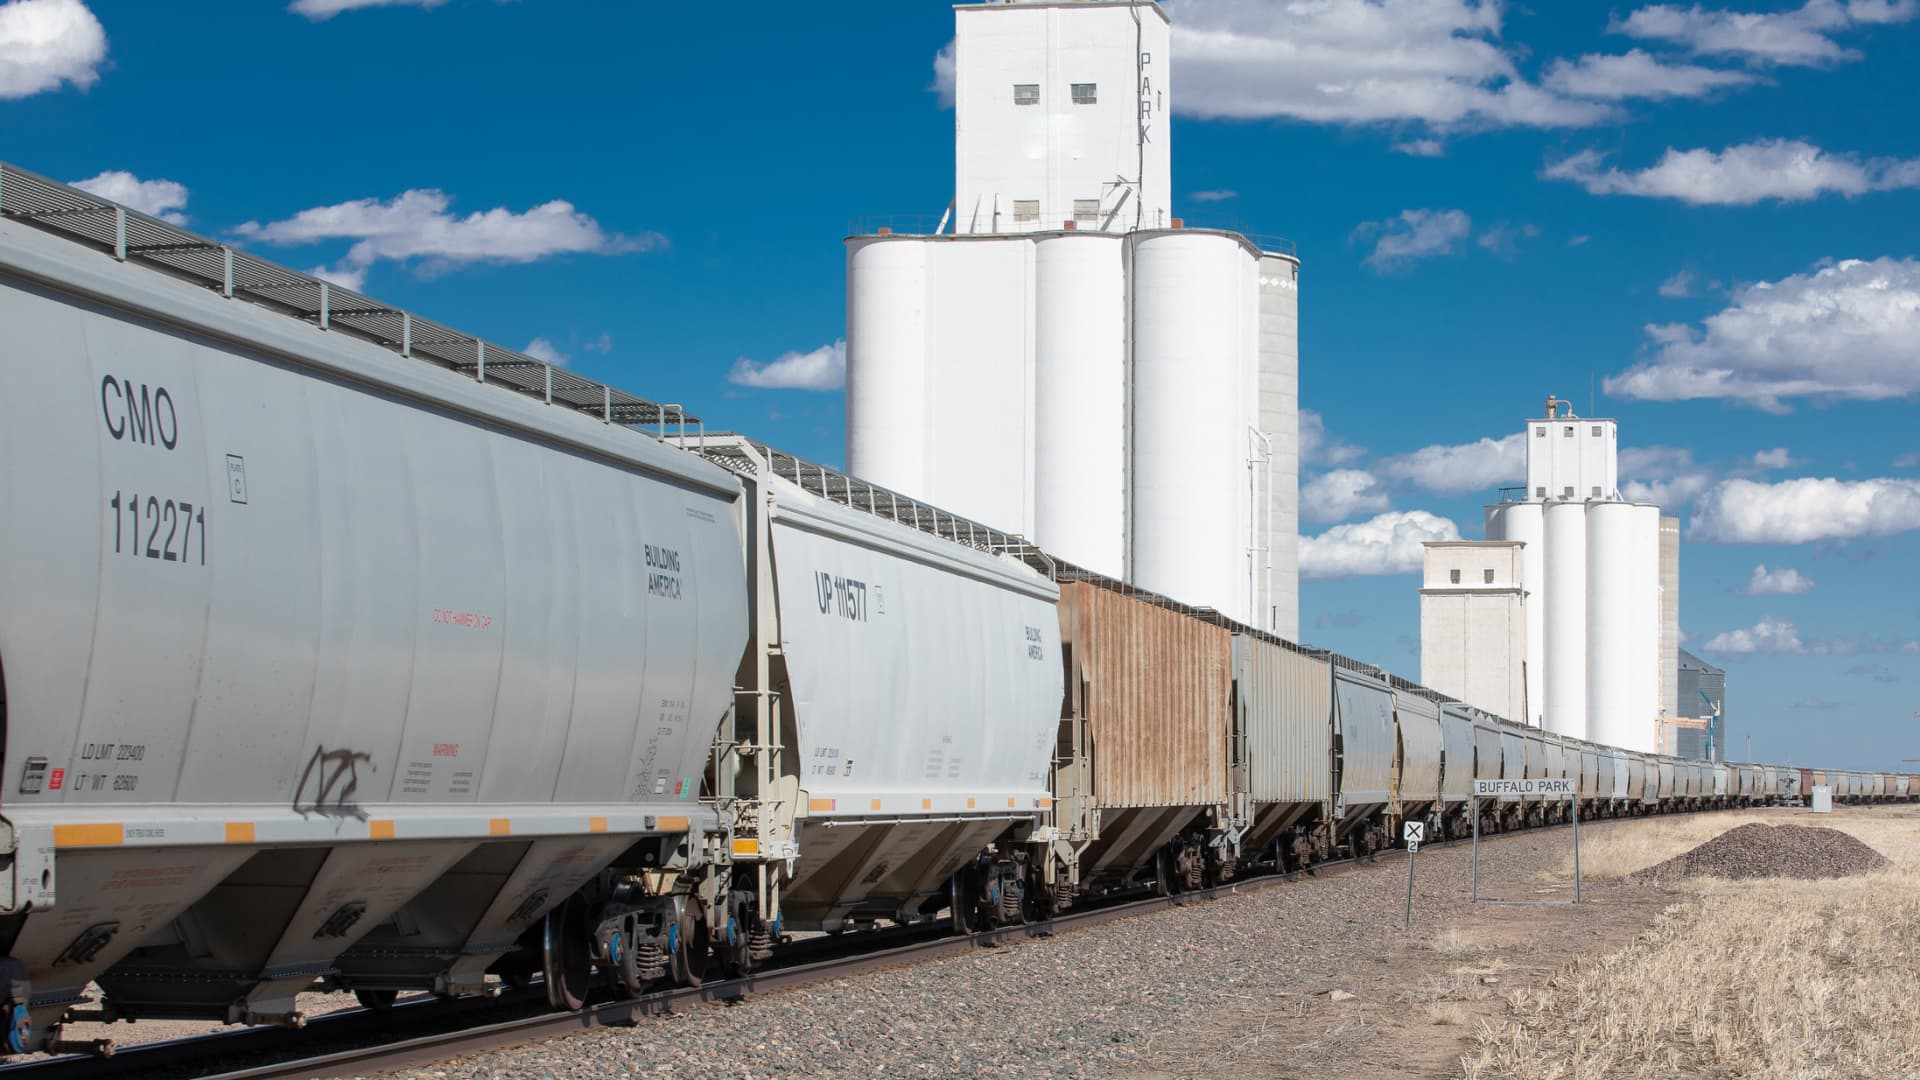 Grain hauling train is stopped at a large Kansas grain silo terminal.